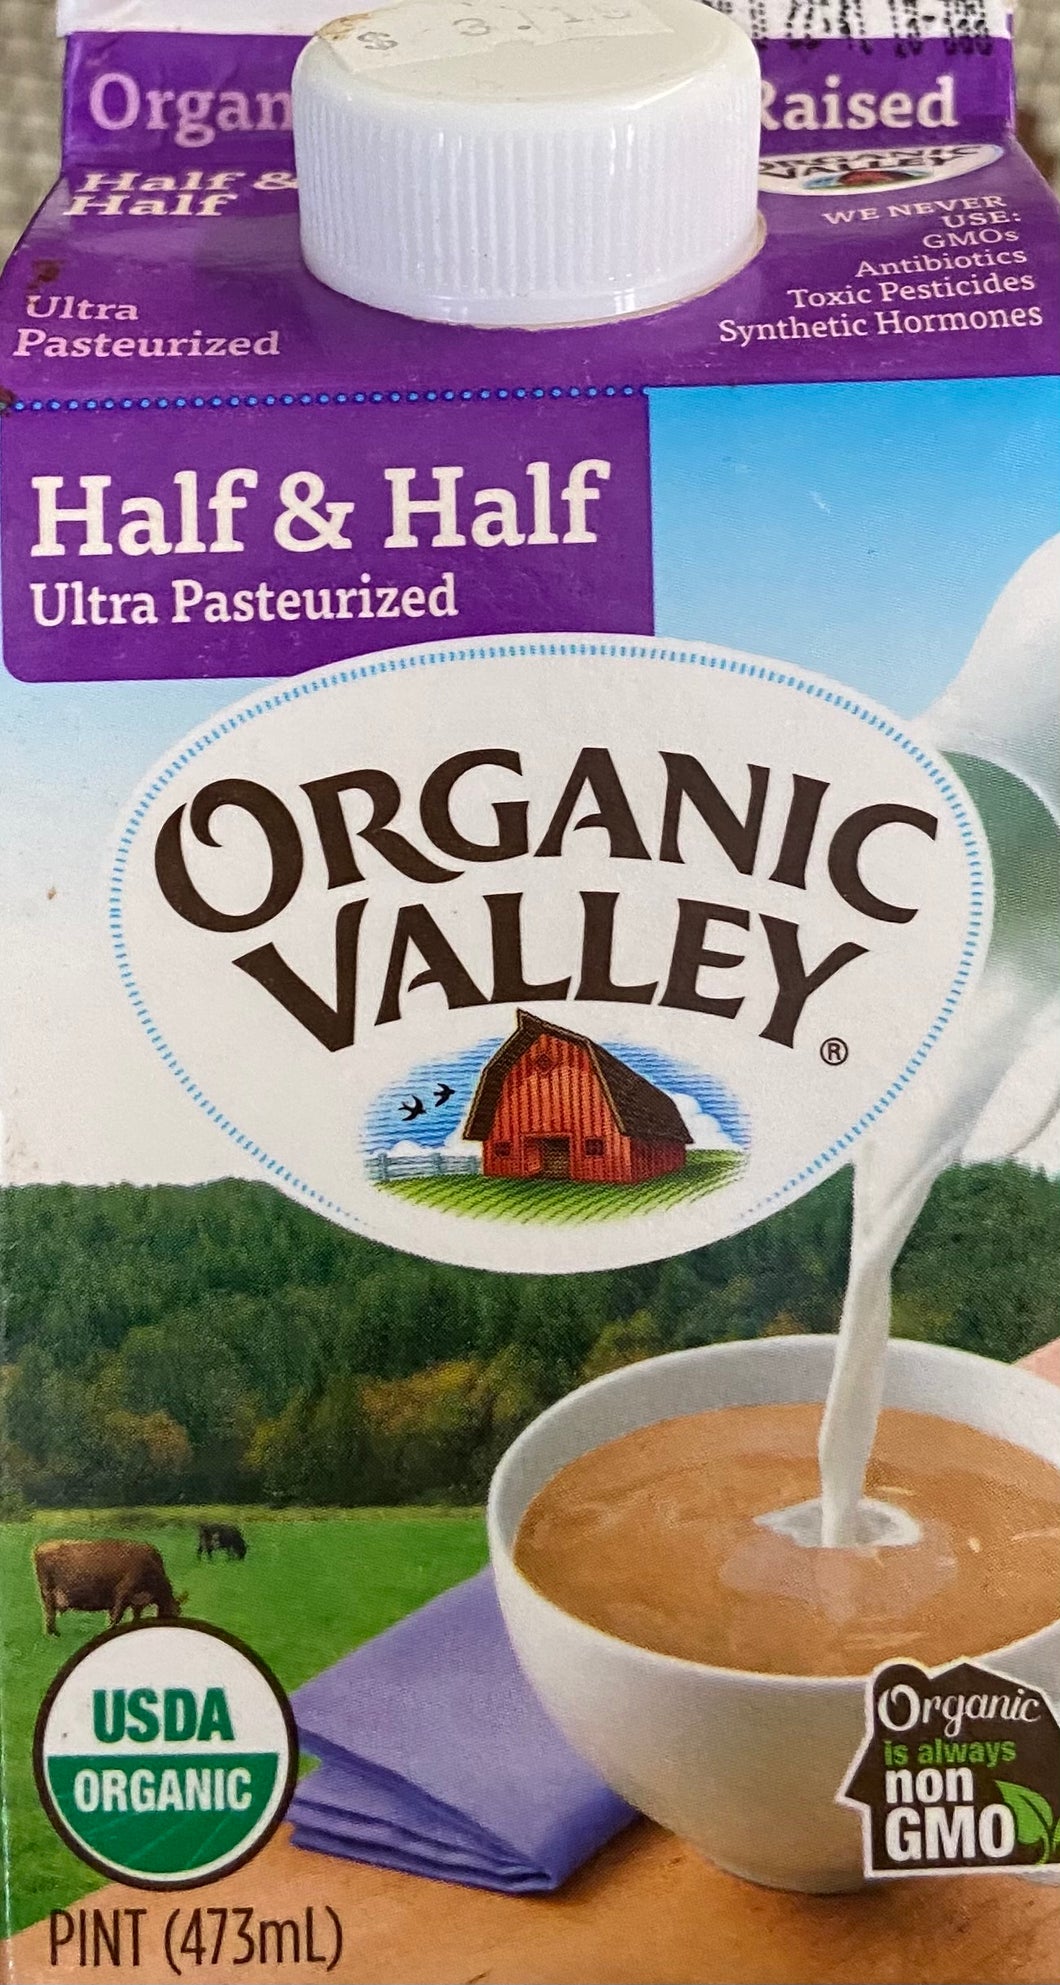 Half & Half, Organic Valley